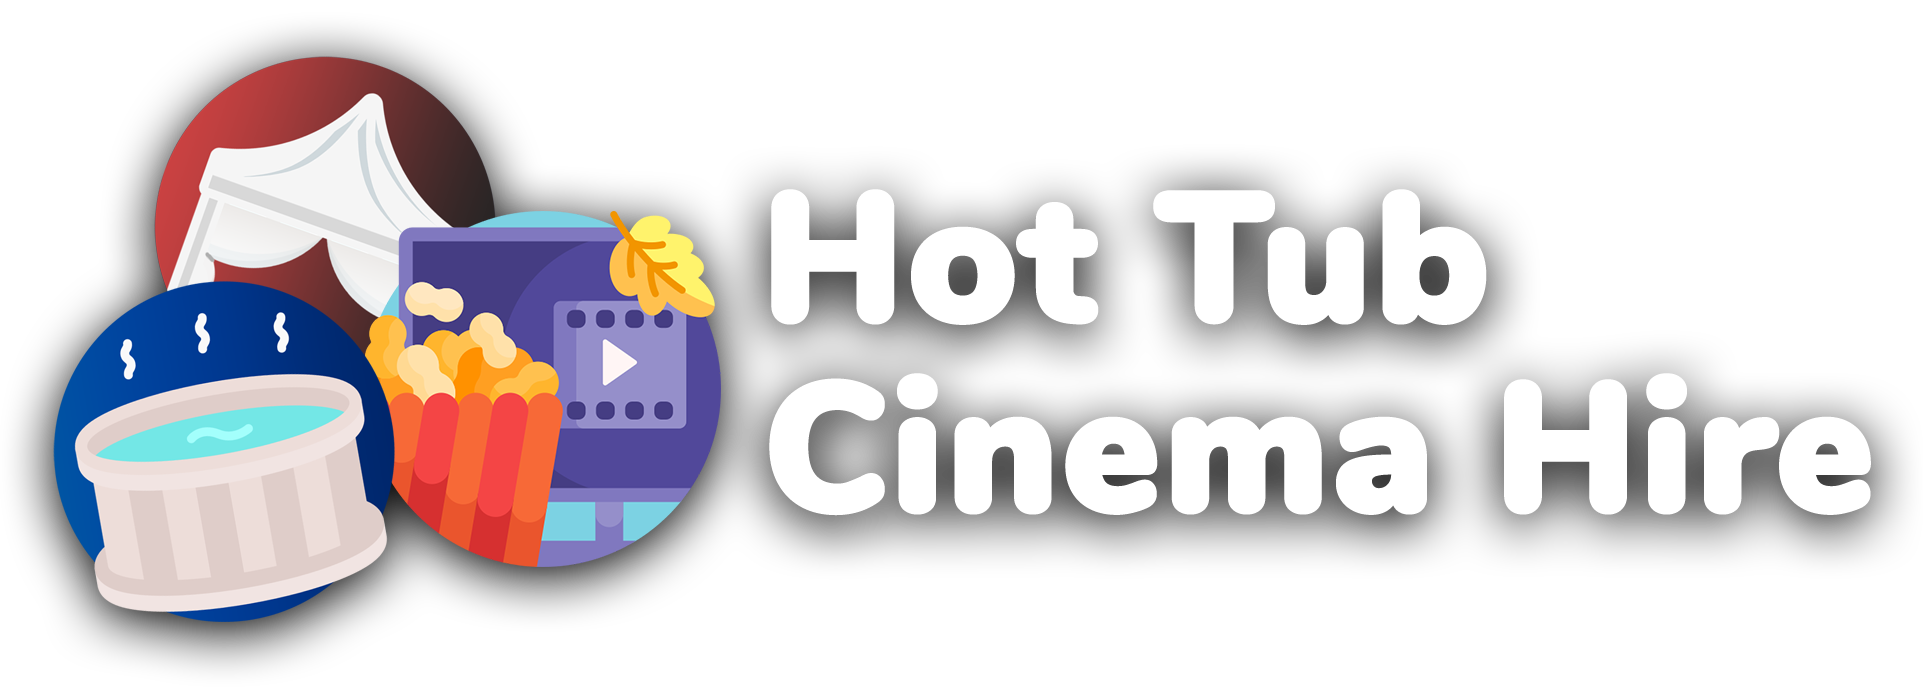 Hot Tub Cinema Hire Logo